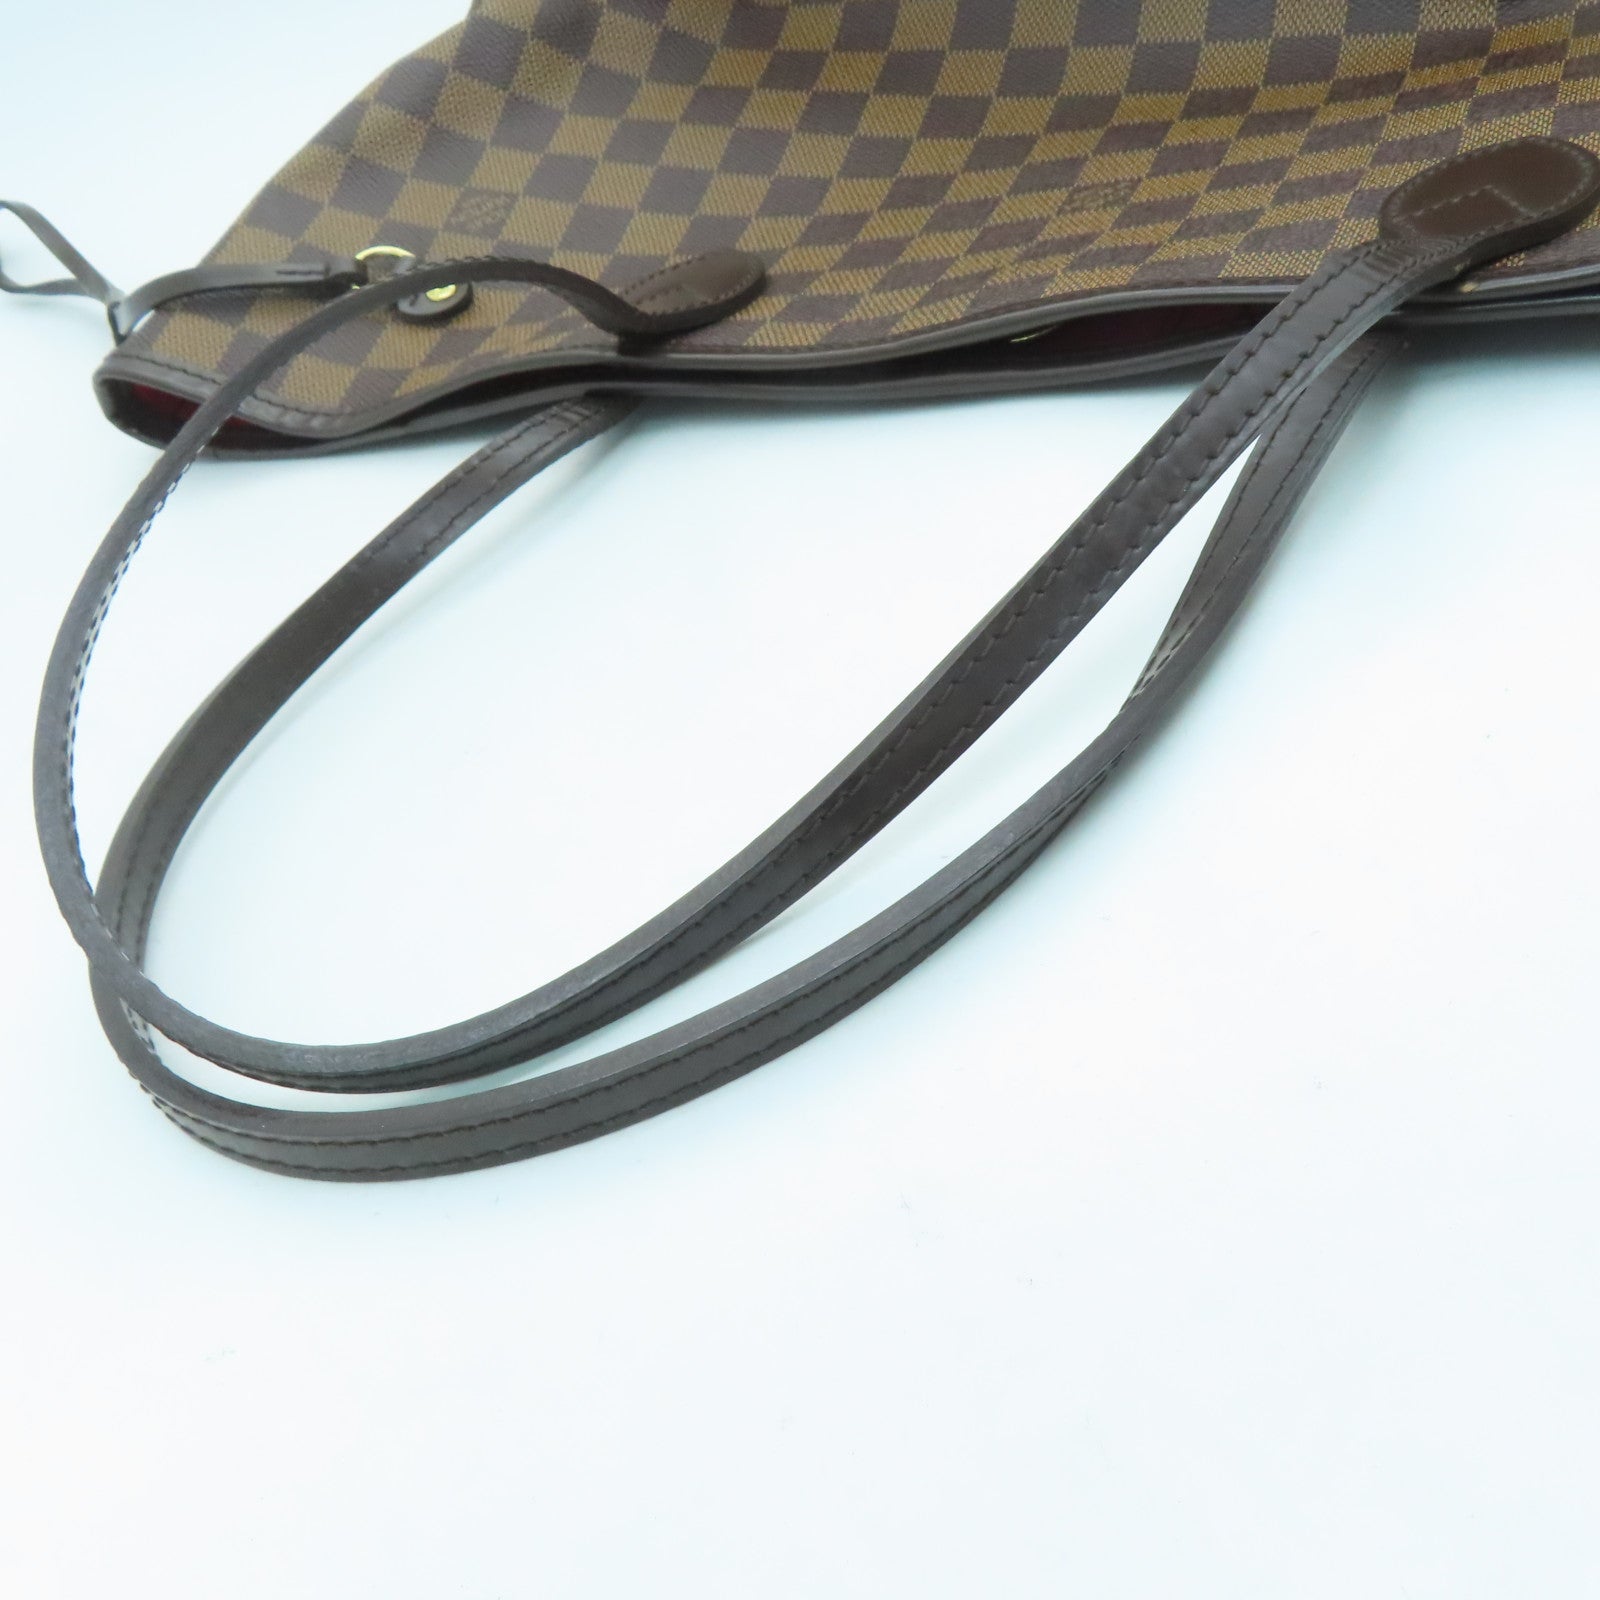 LOUIS VUITTON Damier Neverfull MM gold buckle handle bag brown – Brand Off  Hong Kong Online Store